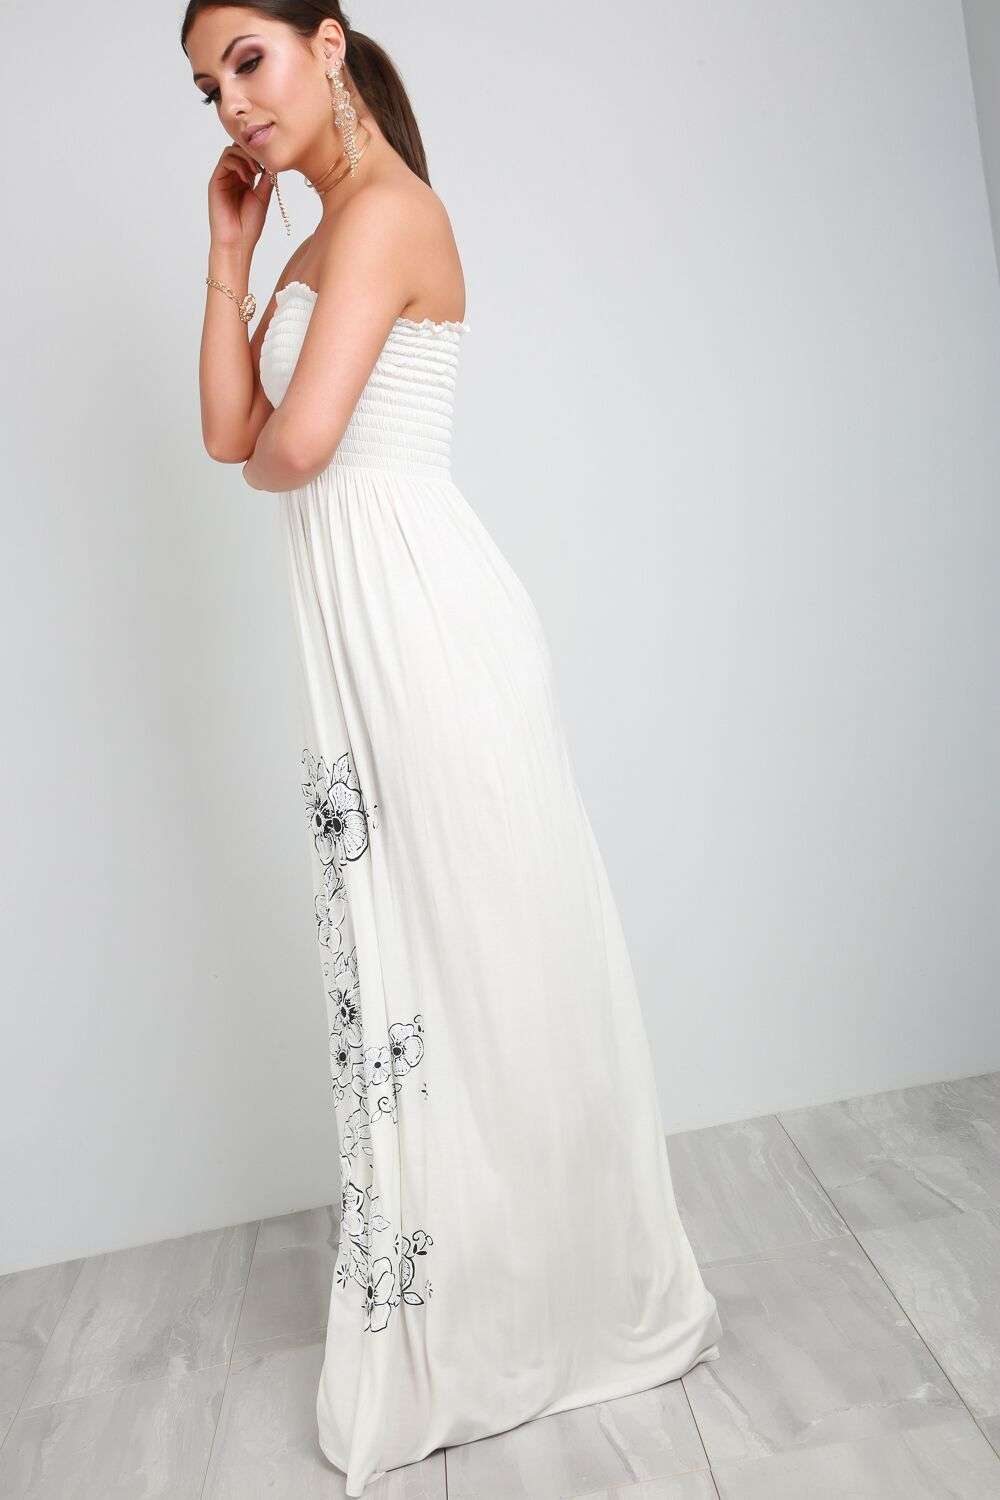 Jessi Floral Print Strapless Maxi Dress - bejealous-com